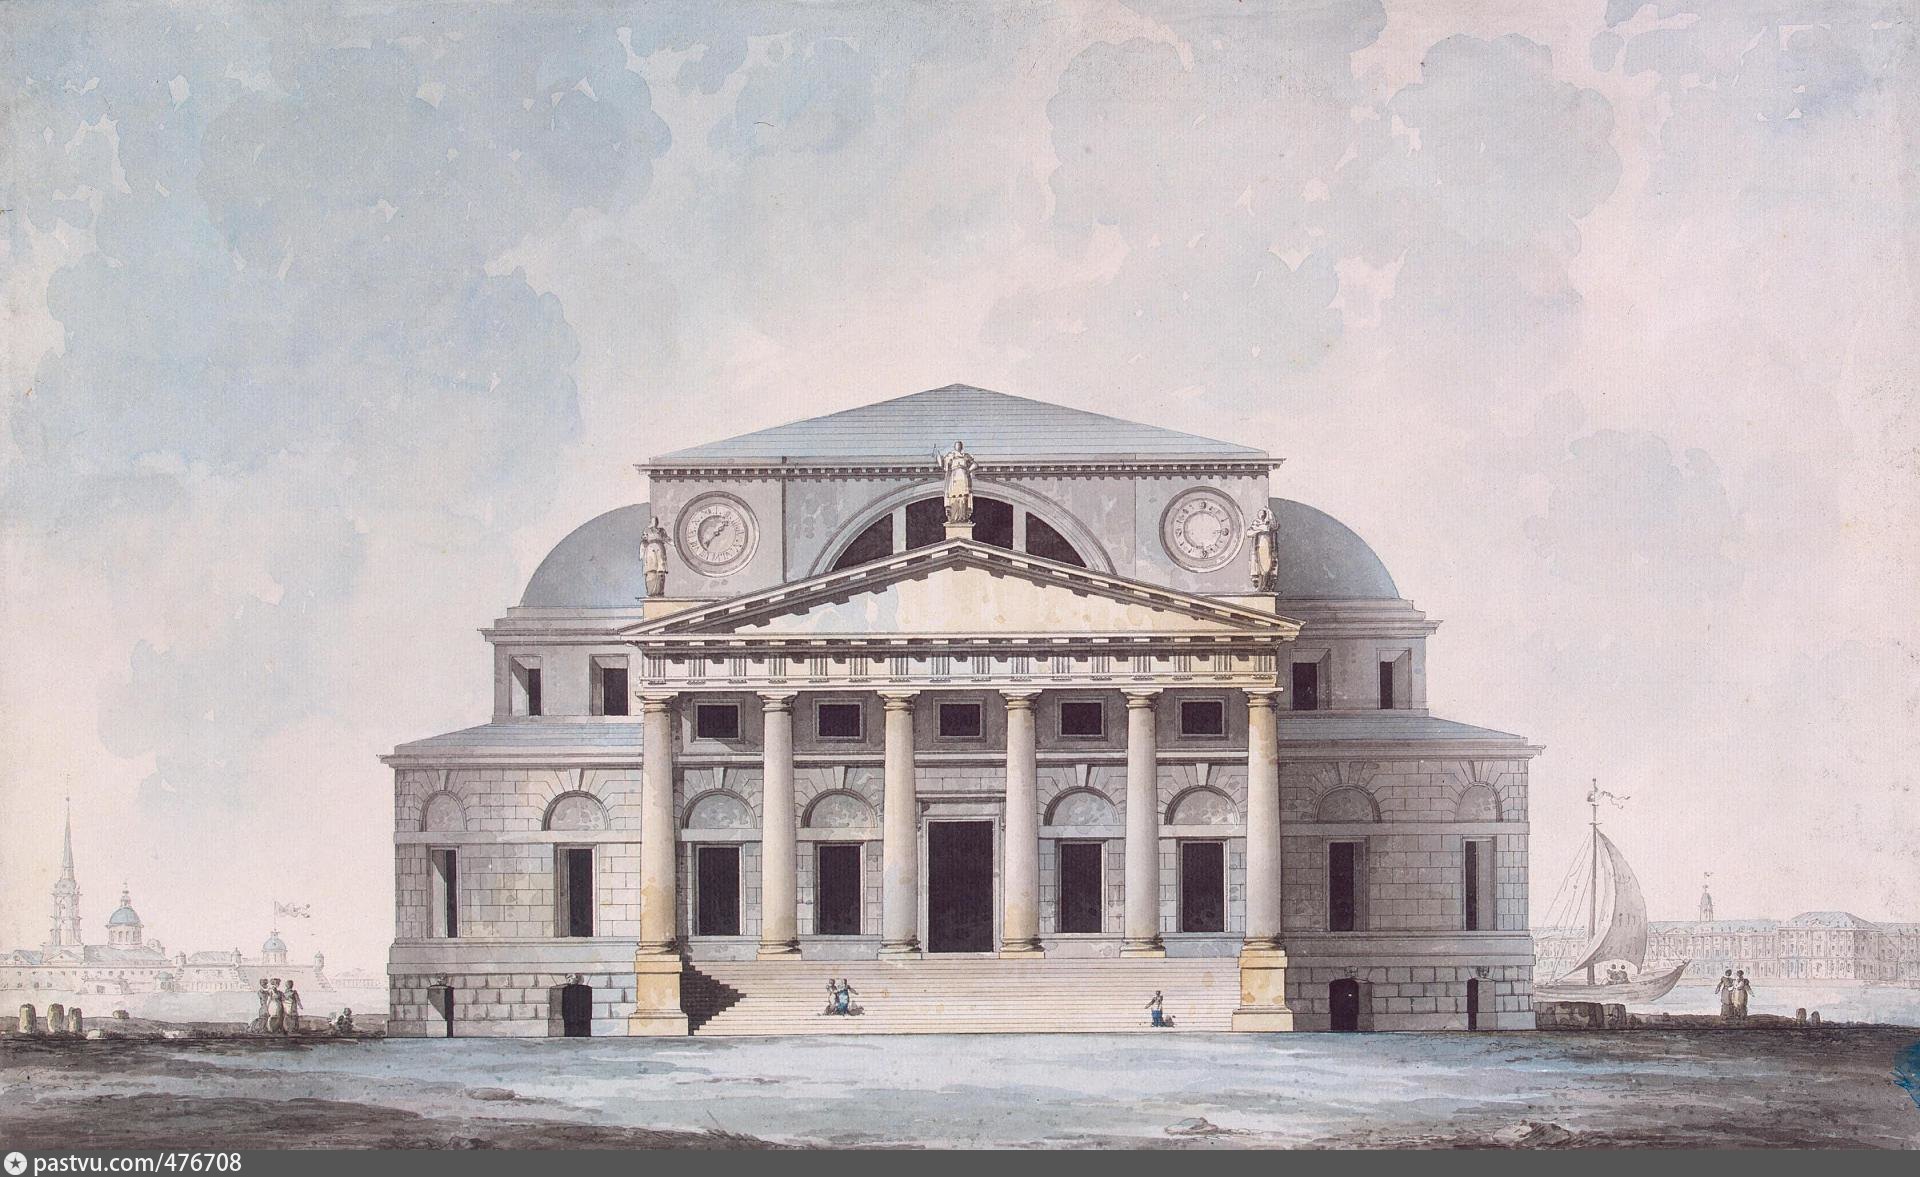 Петербург в стиле классицизма. Кваренги Джакомо (1744-1817). Джакомо Доменико Кваренги архитектура. Елагин дворец Джакомо Кваренги. Здание биржи Джакомо Кваренги.